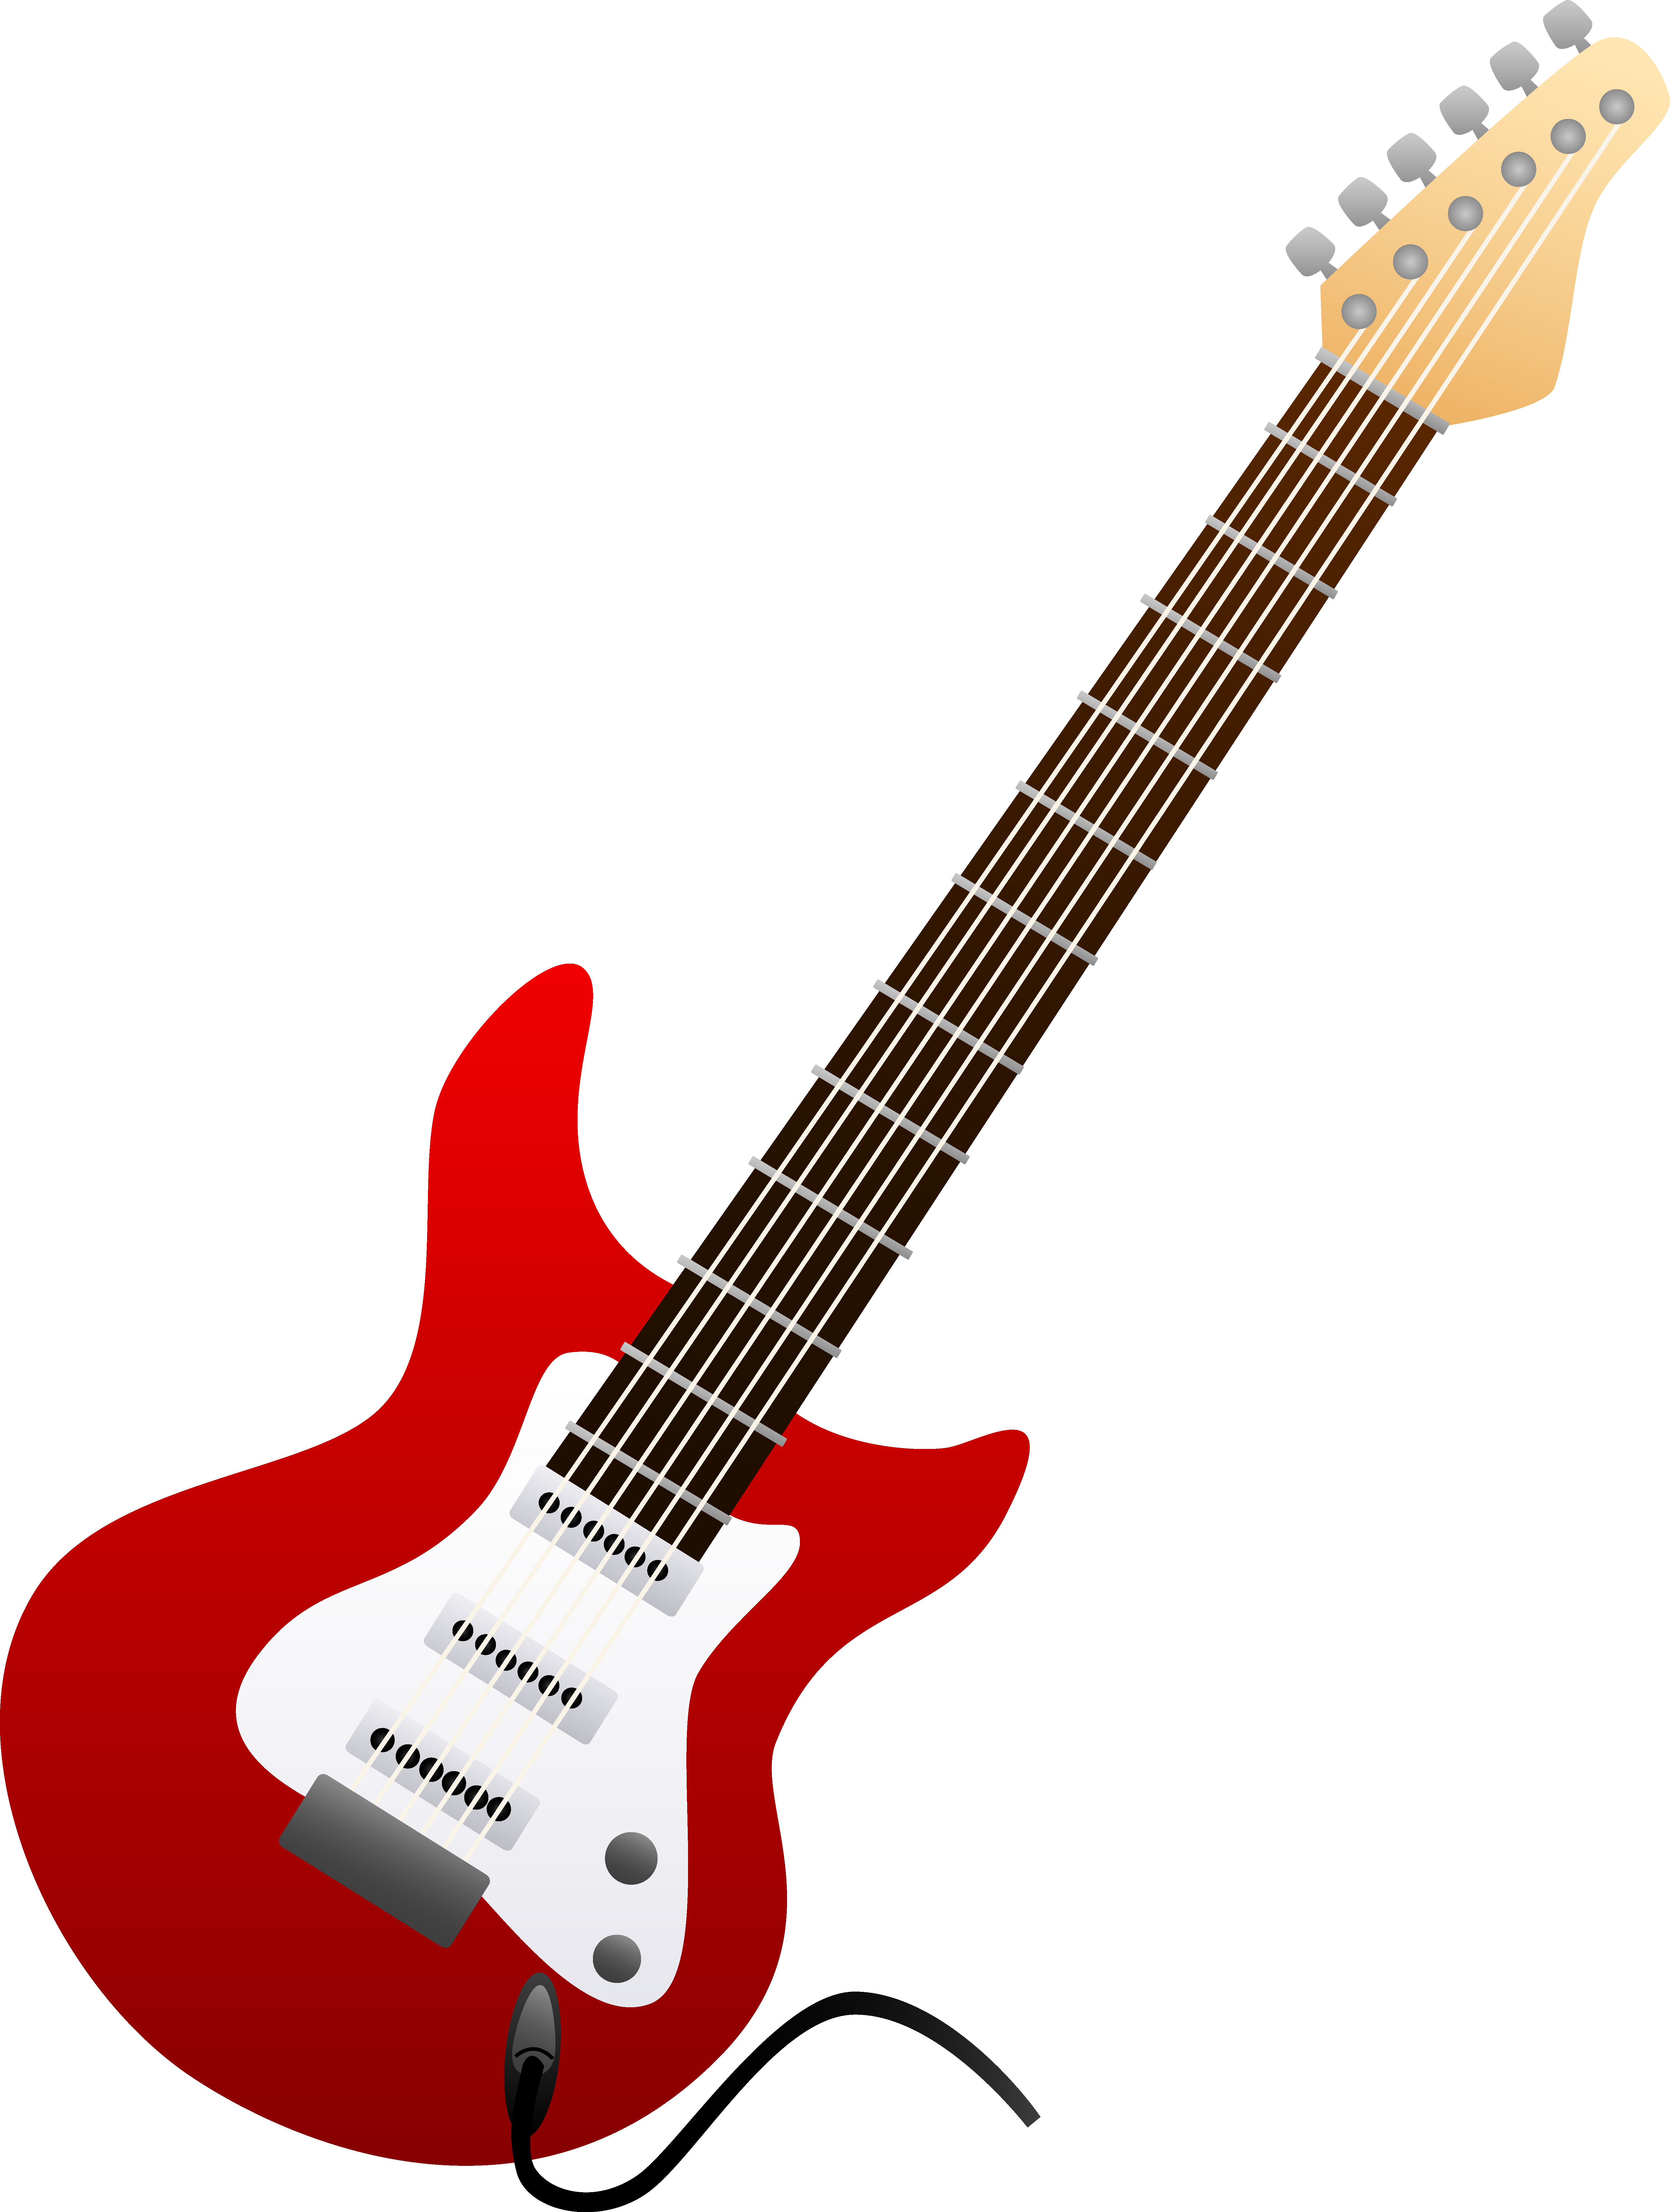 Free Guitar Art Images, Download Free Guitar Art Images png images